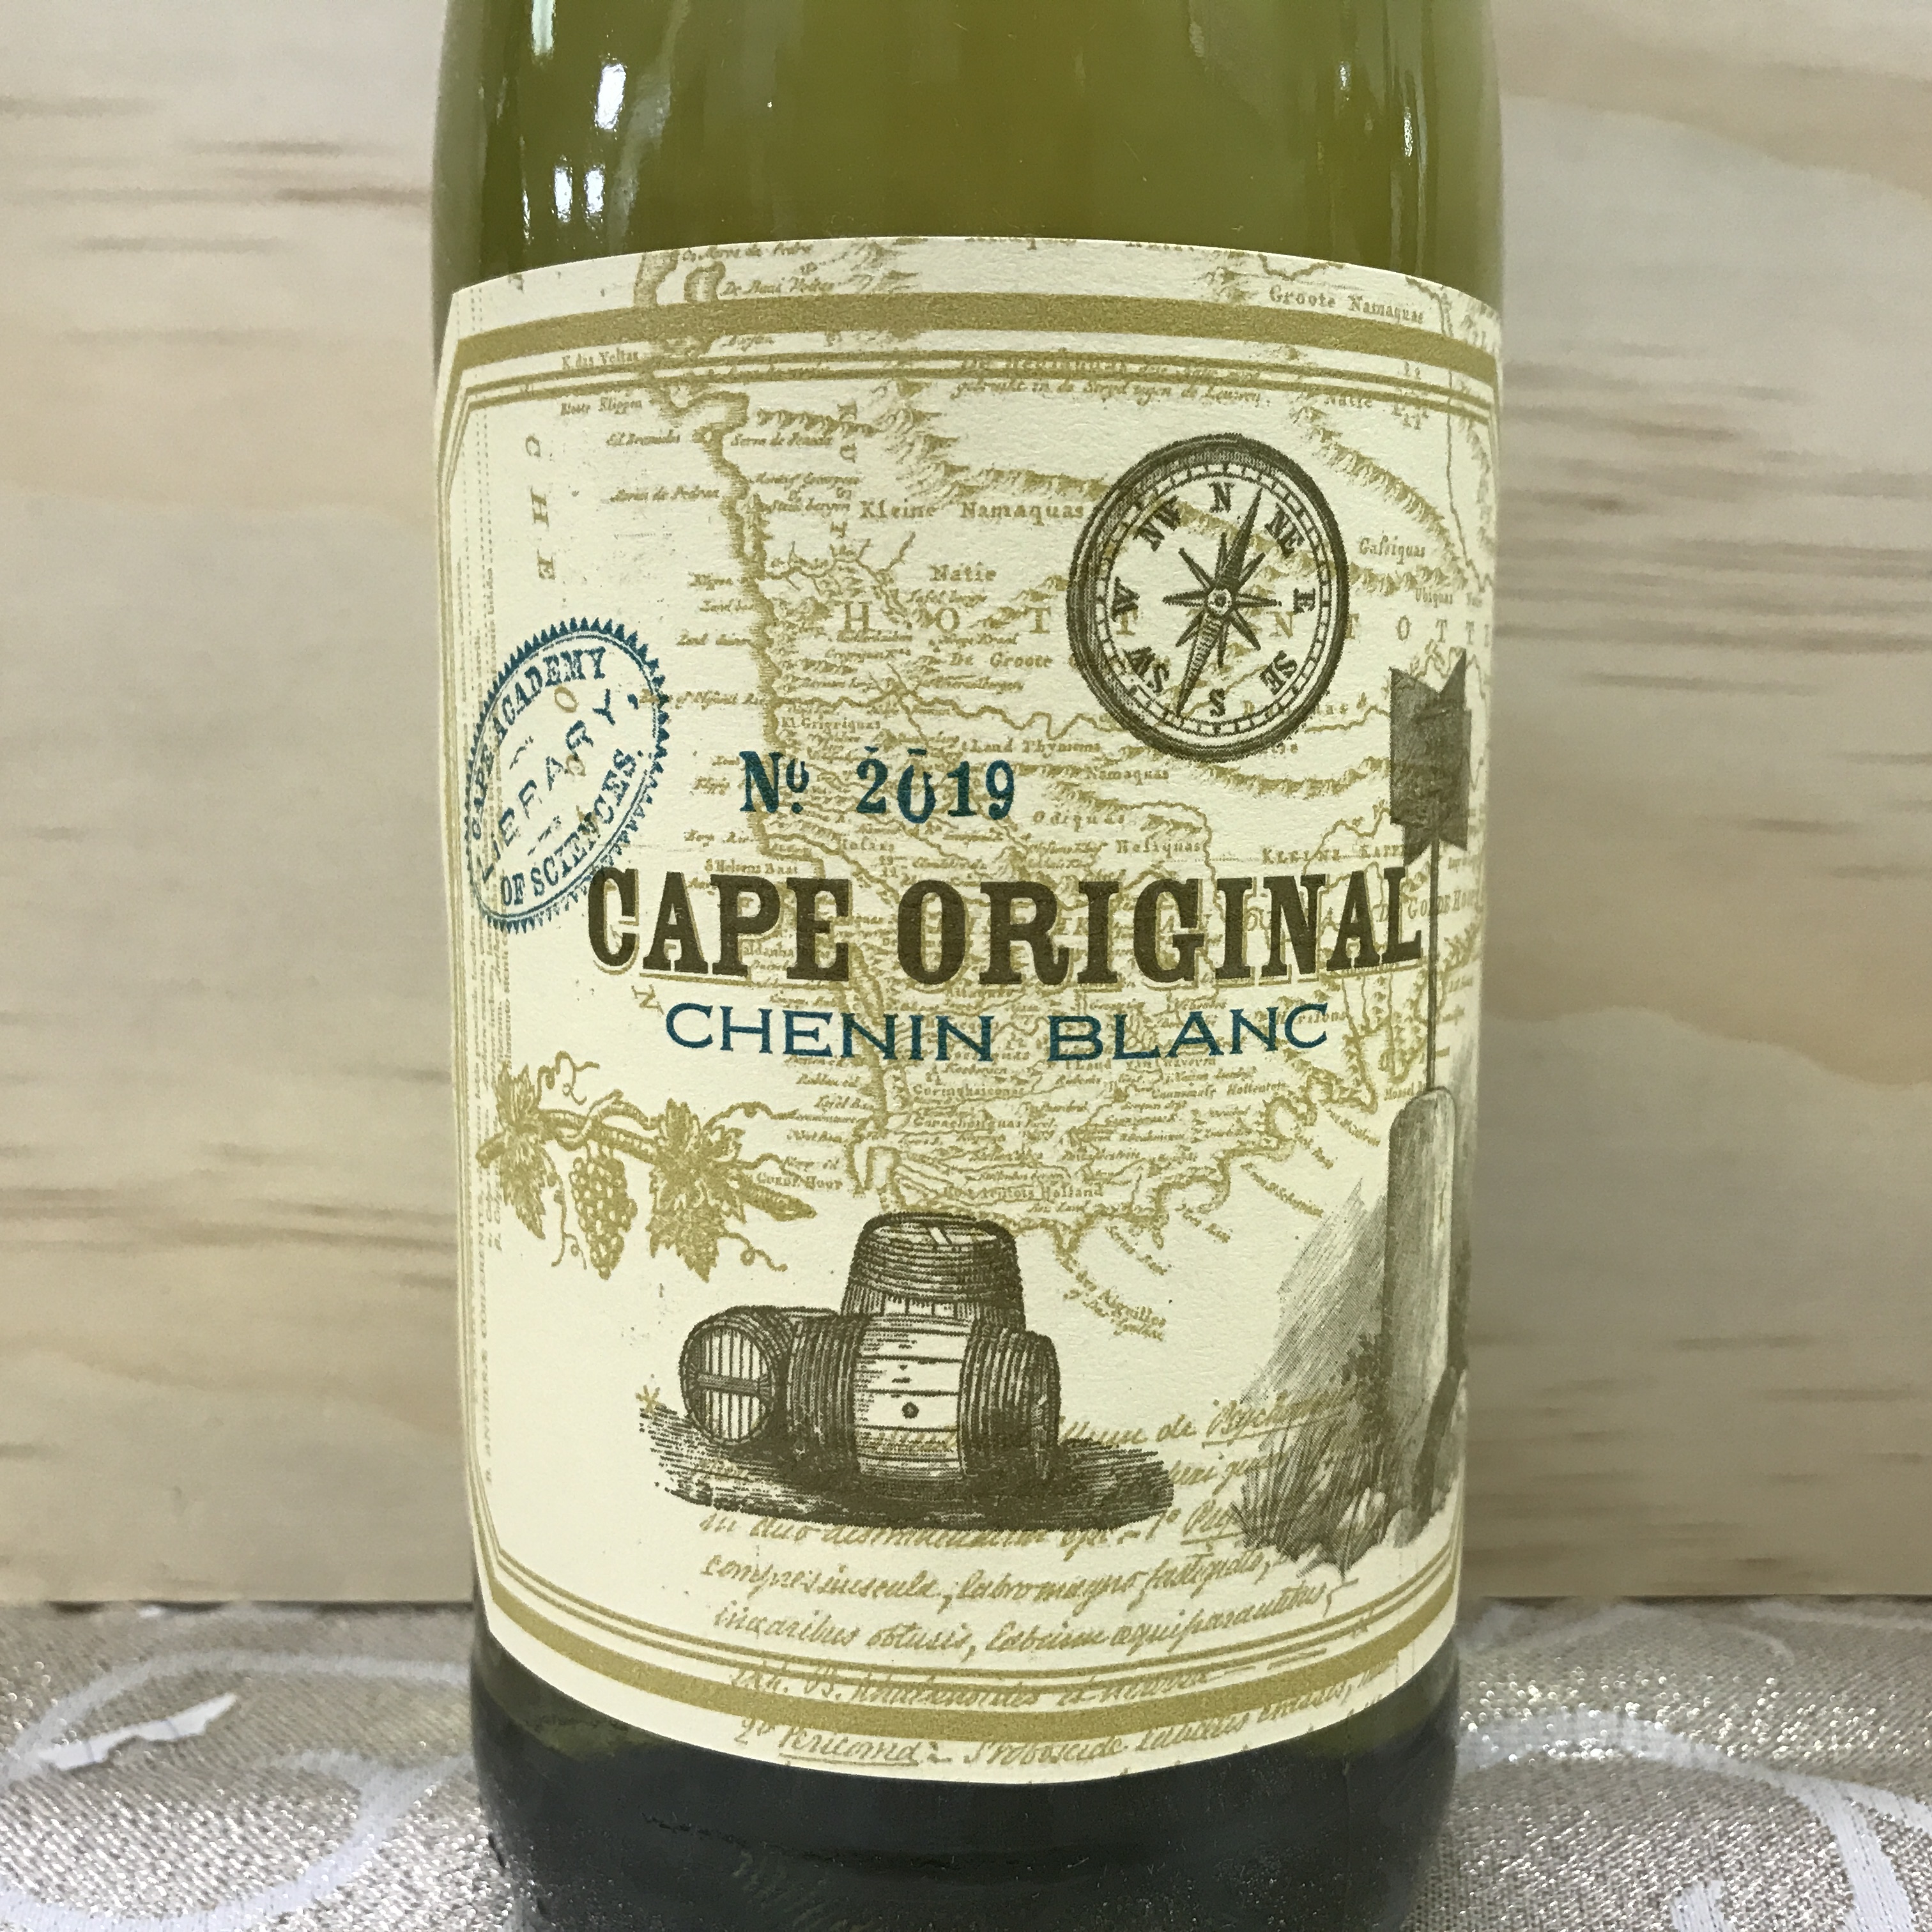 Cape Original Chenin Blanc 2019